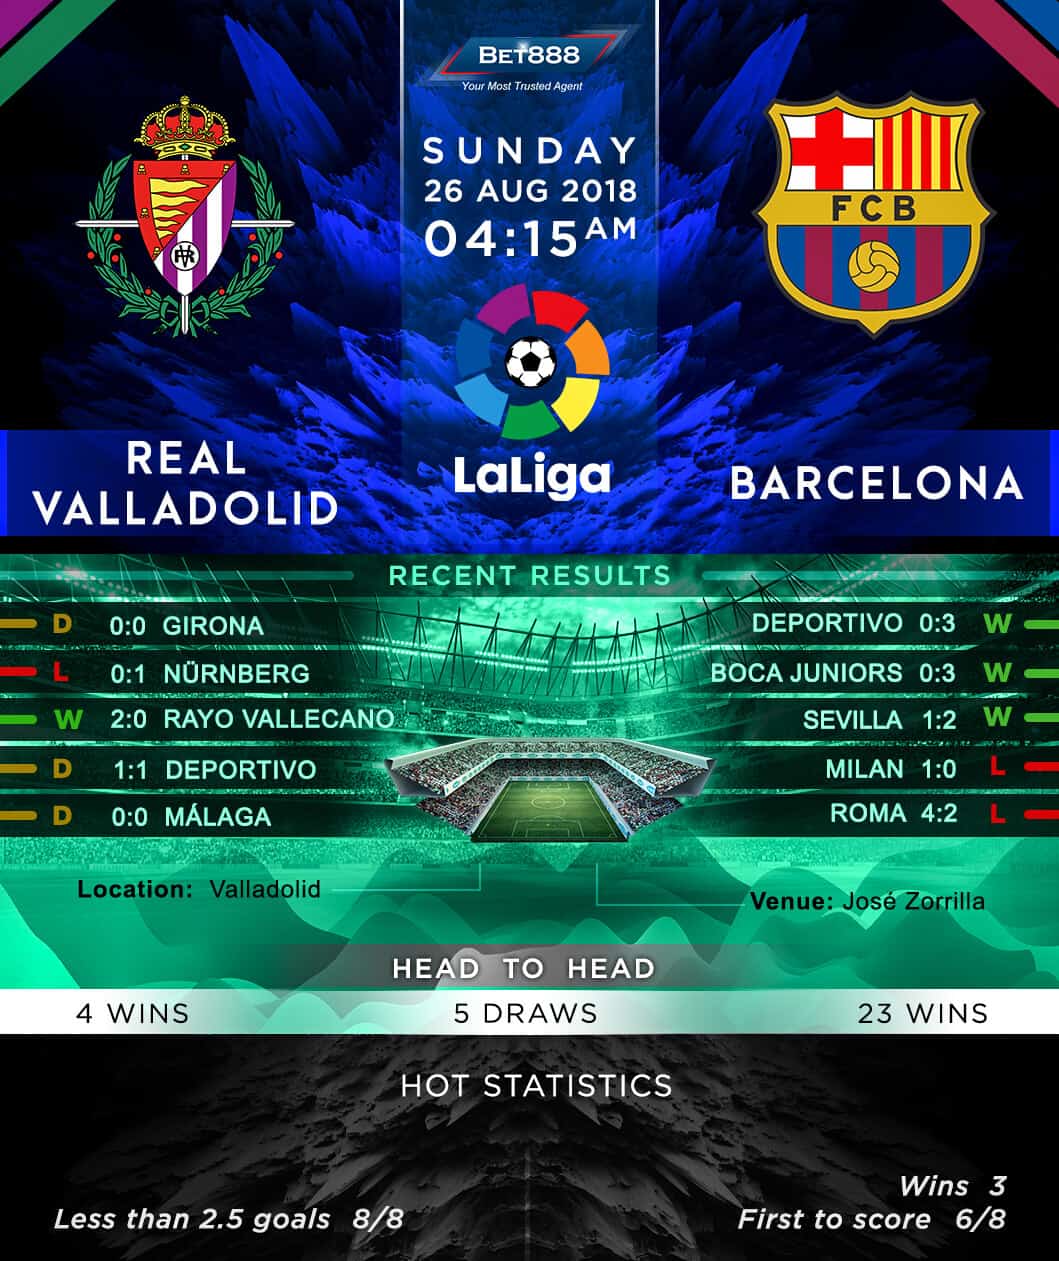 Real Valladolid vs Barcelona 26/08/18